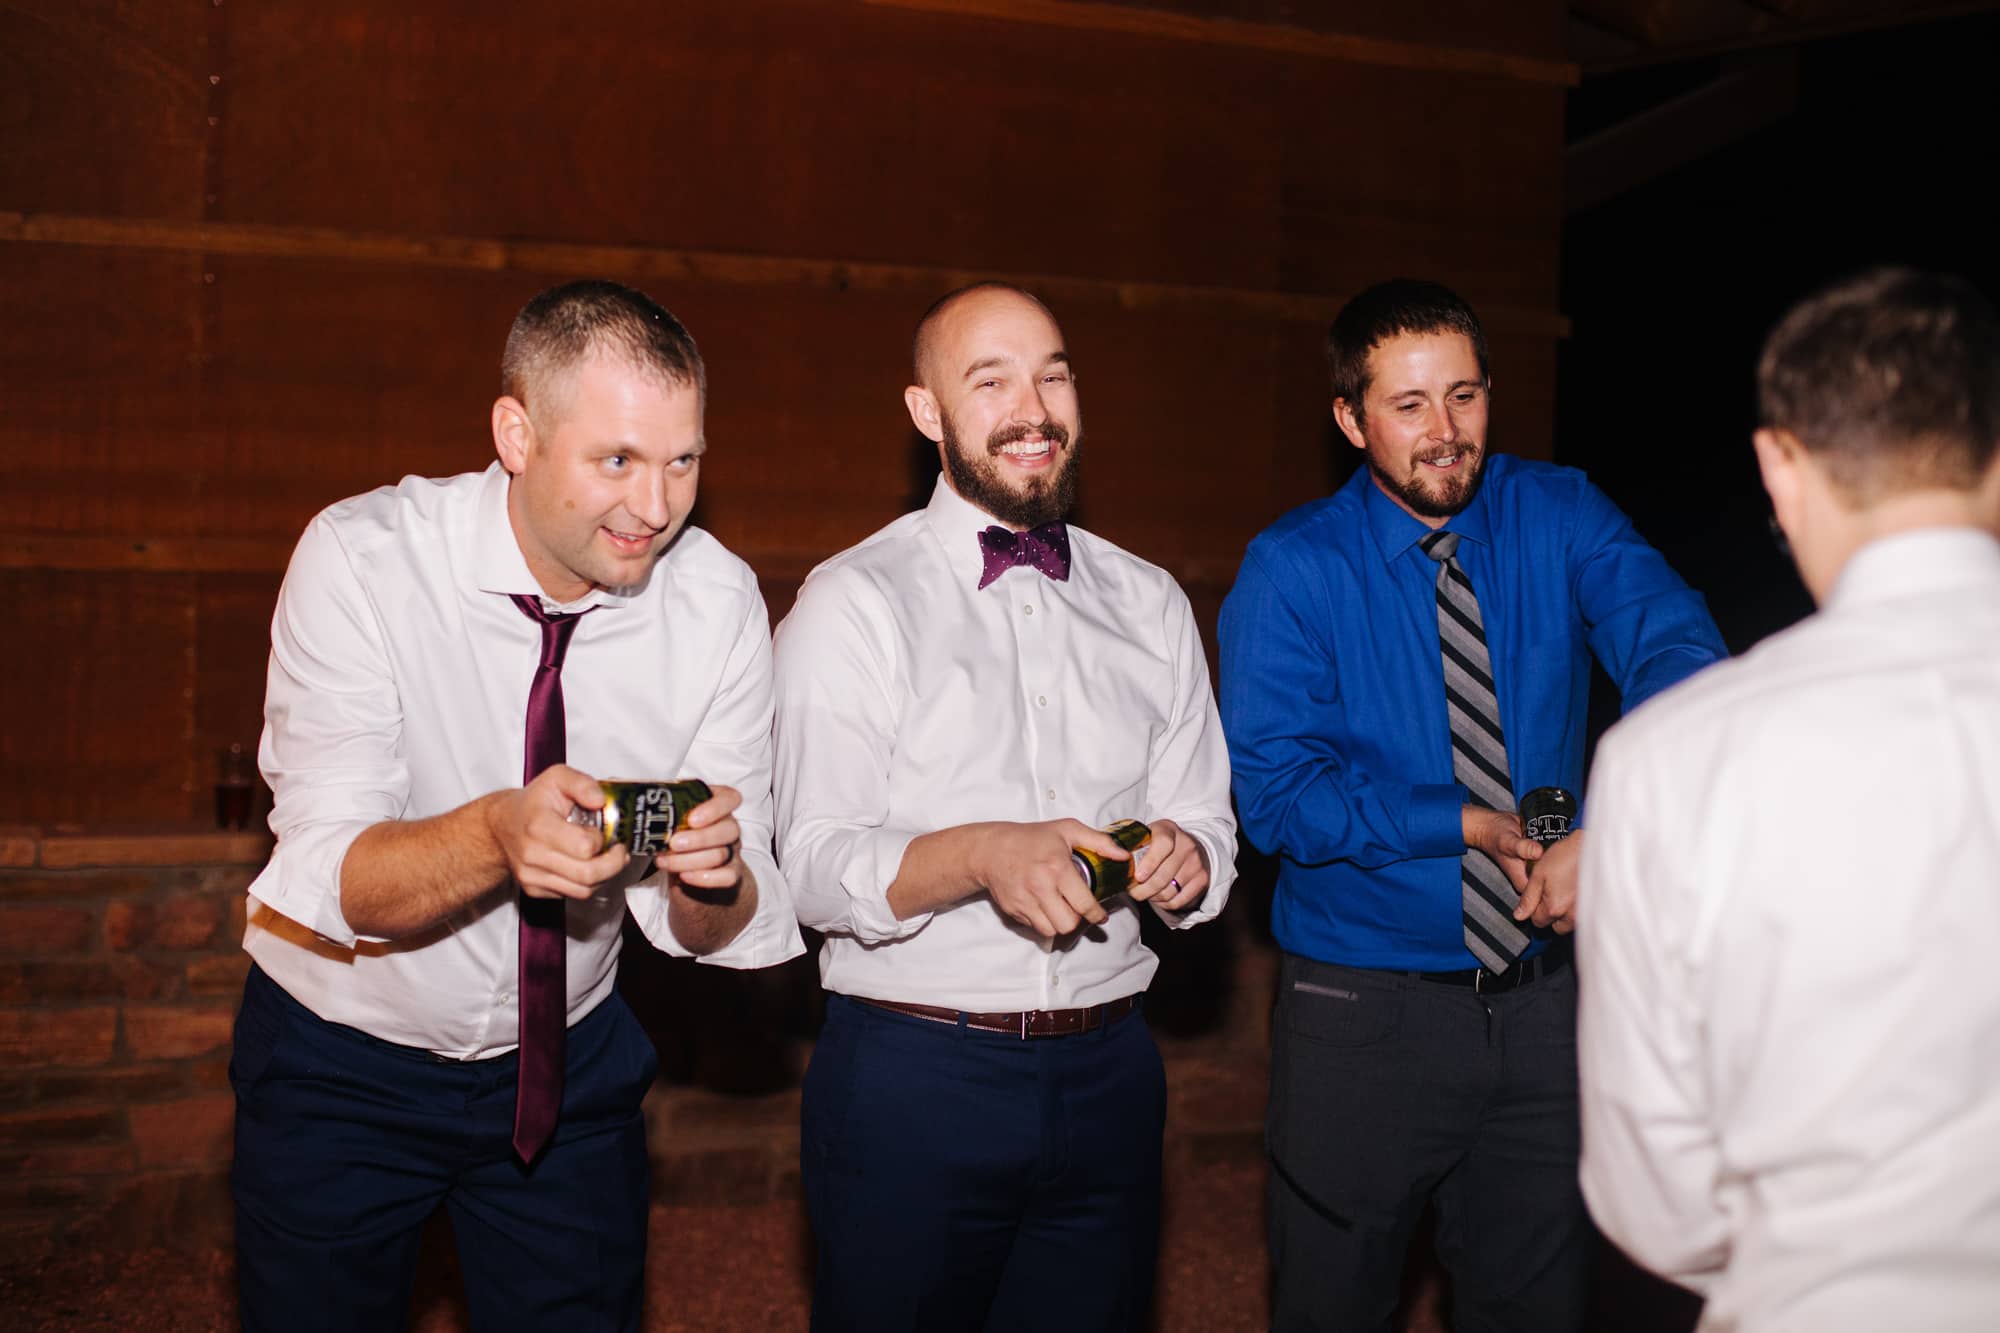 groom and groomsmen, shotgun beer at wedding, groomsmen funny photos, shotgunning beers during wedding, wedding shenanigans 